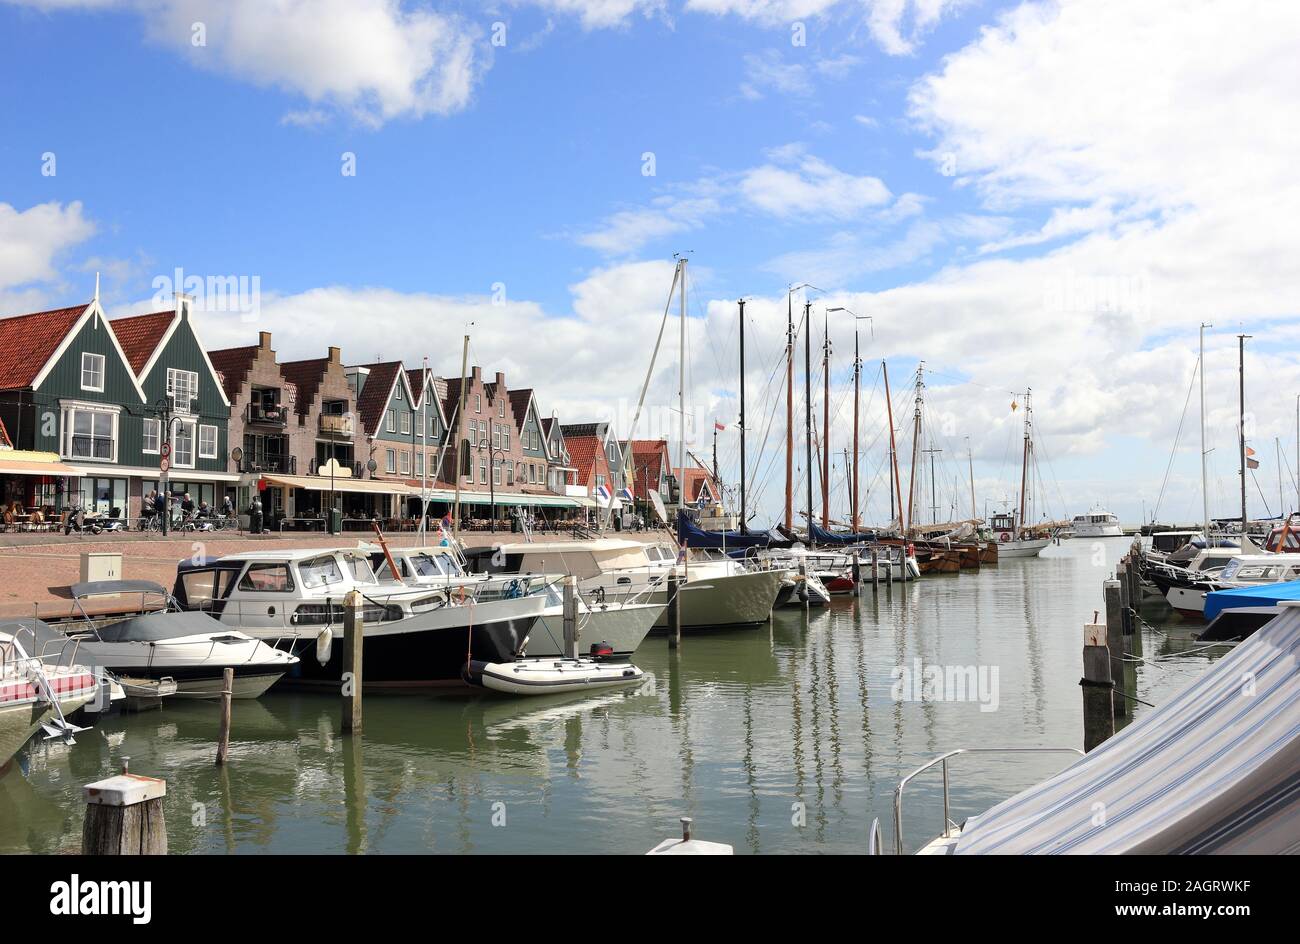 The Harbor of Volendam. The Netherlands, Europe. Stock Photo